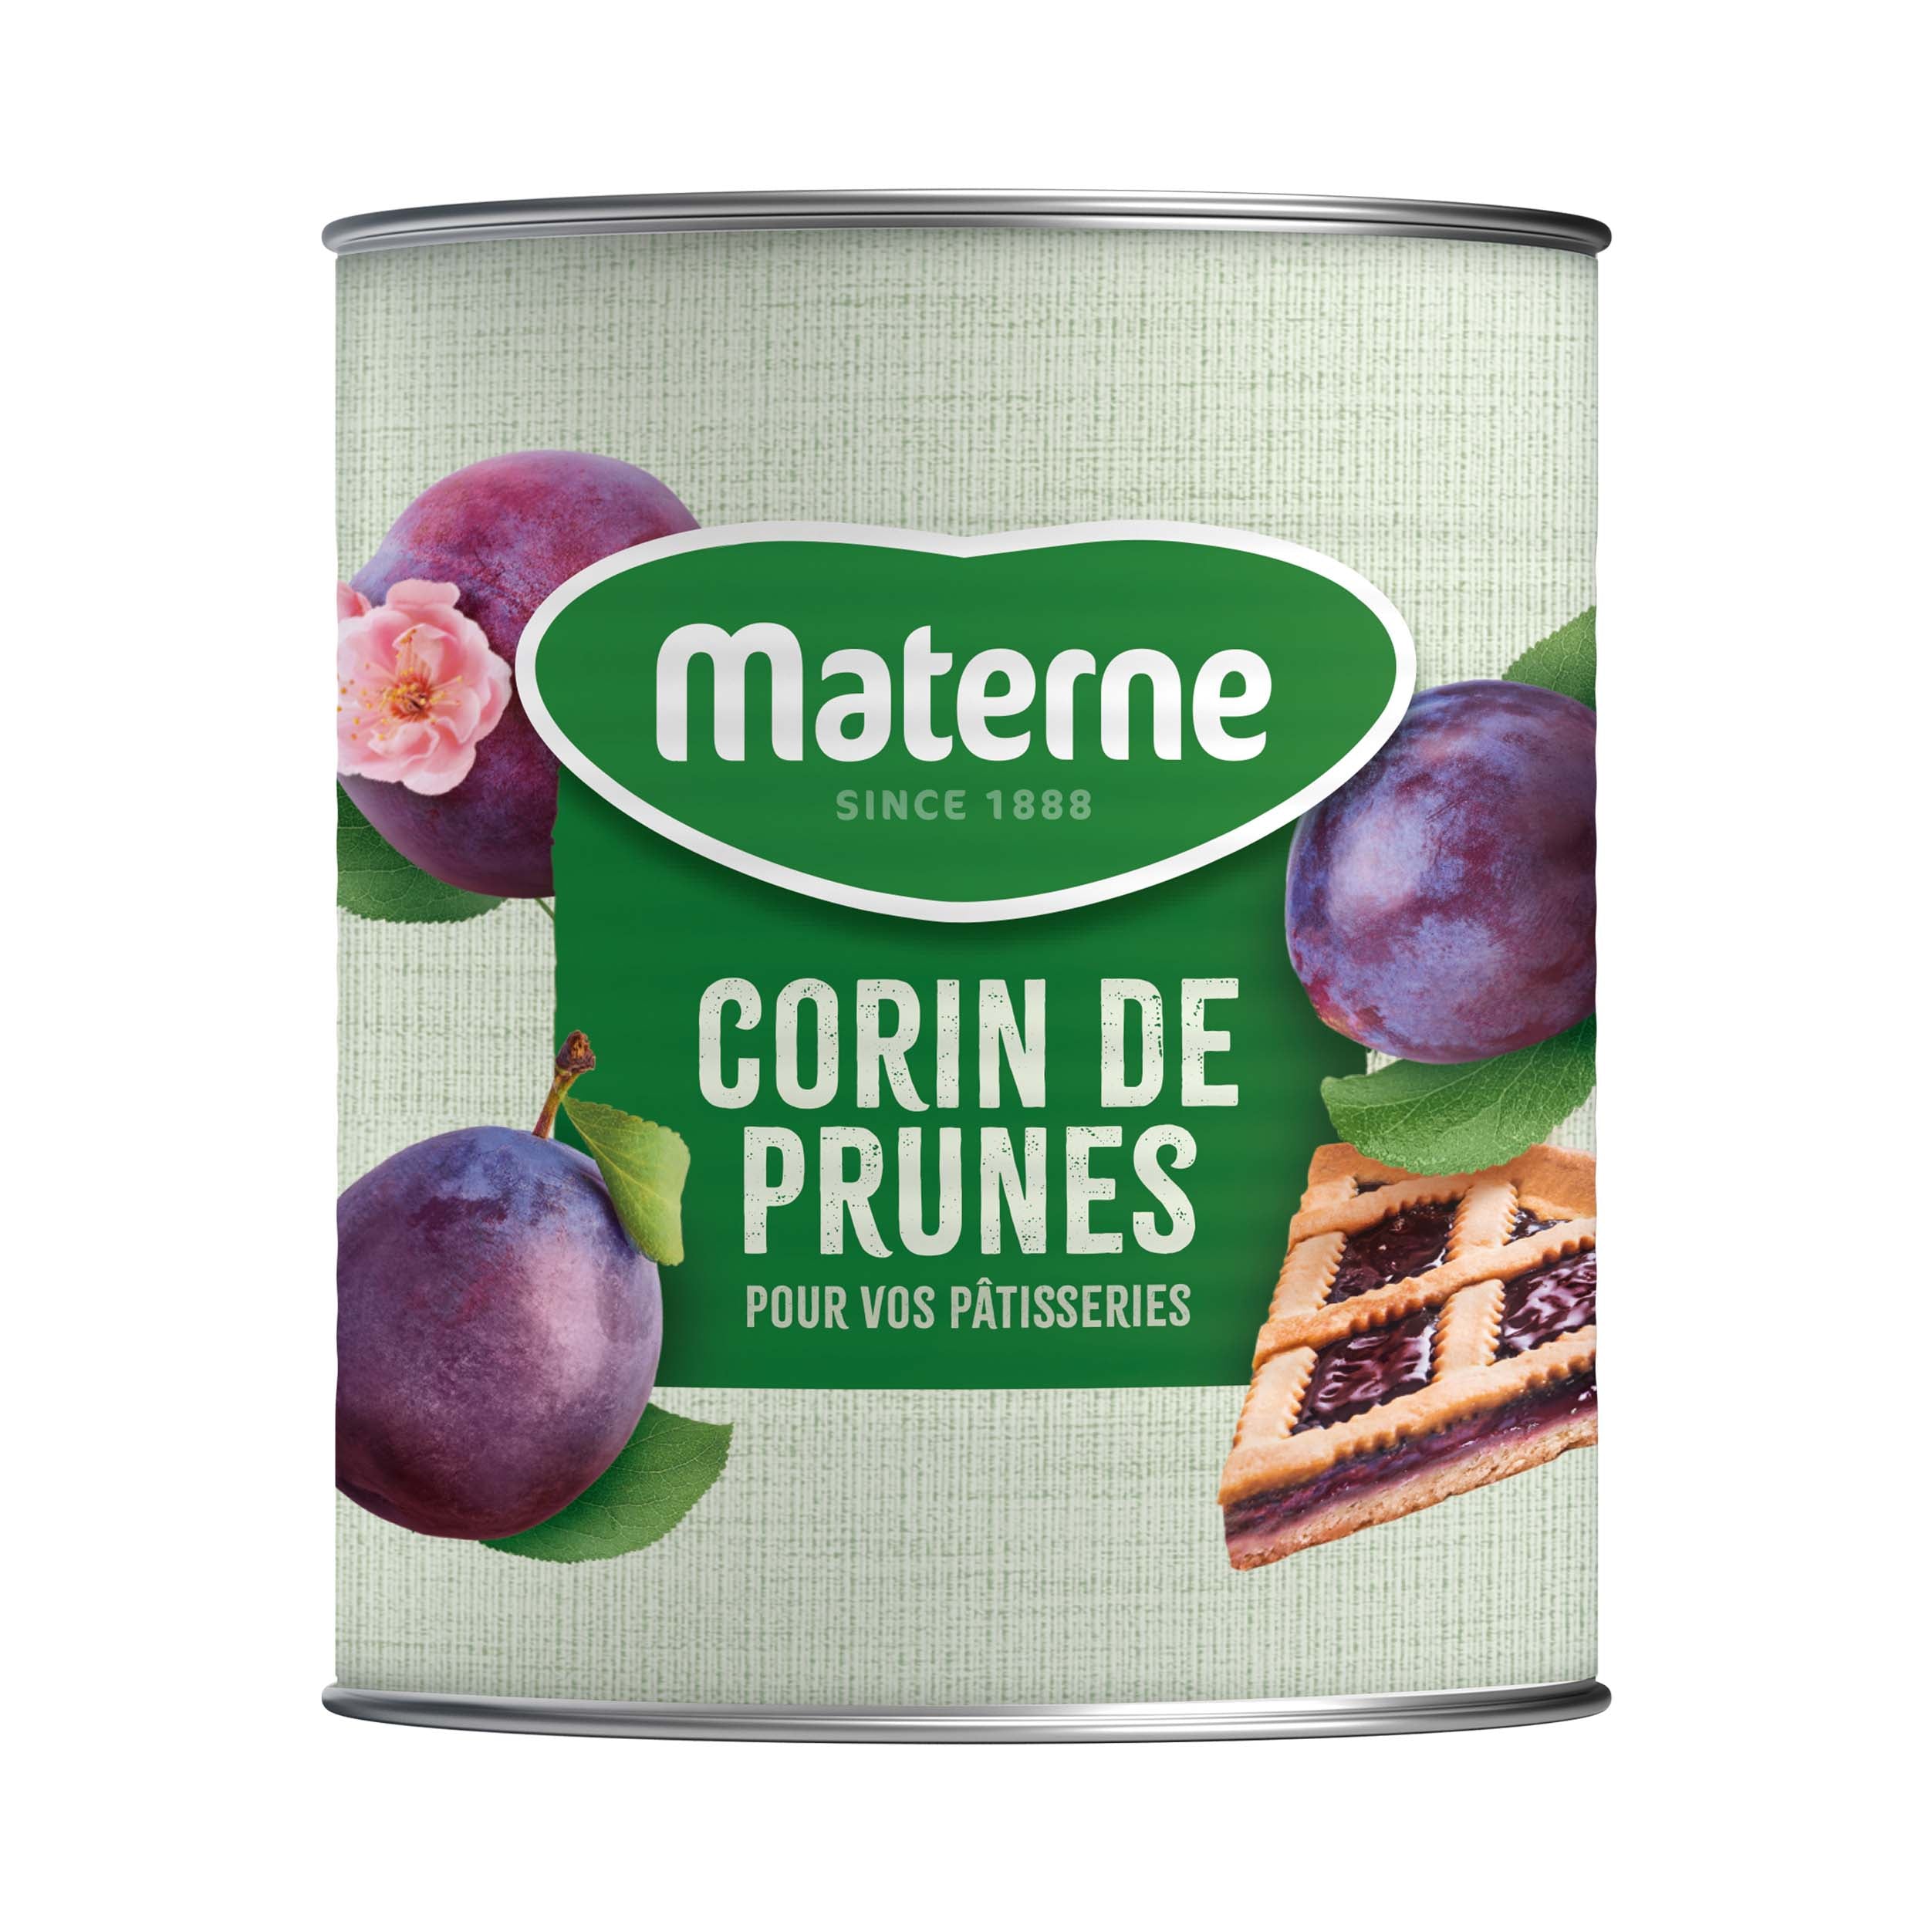 Corins - Prunes<br>Materne